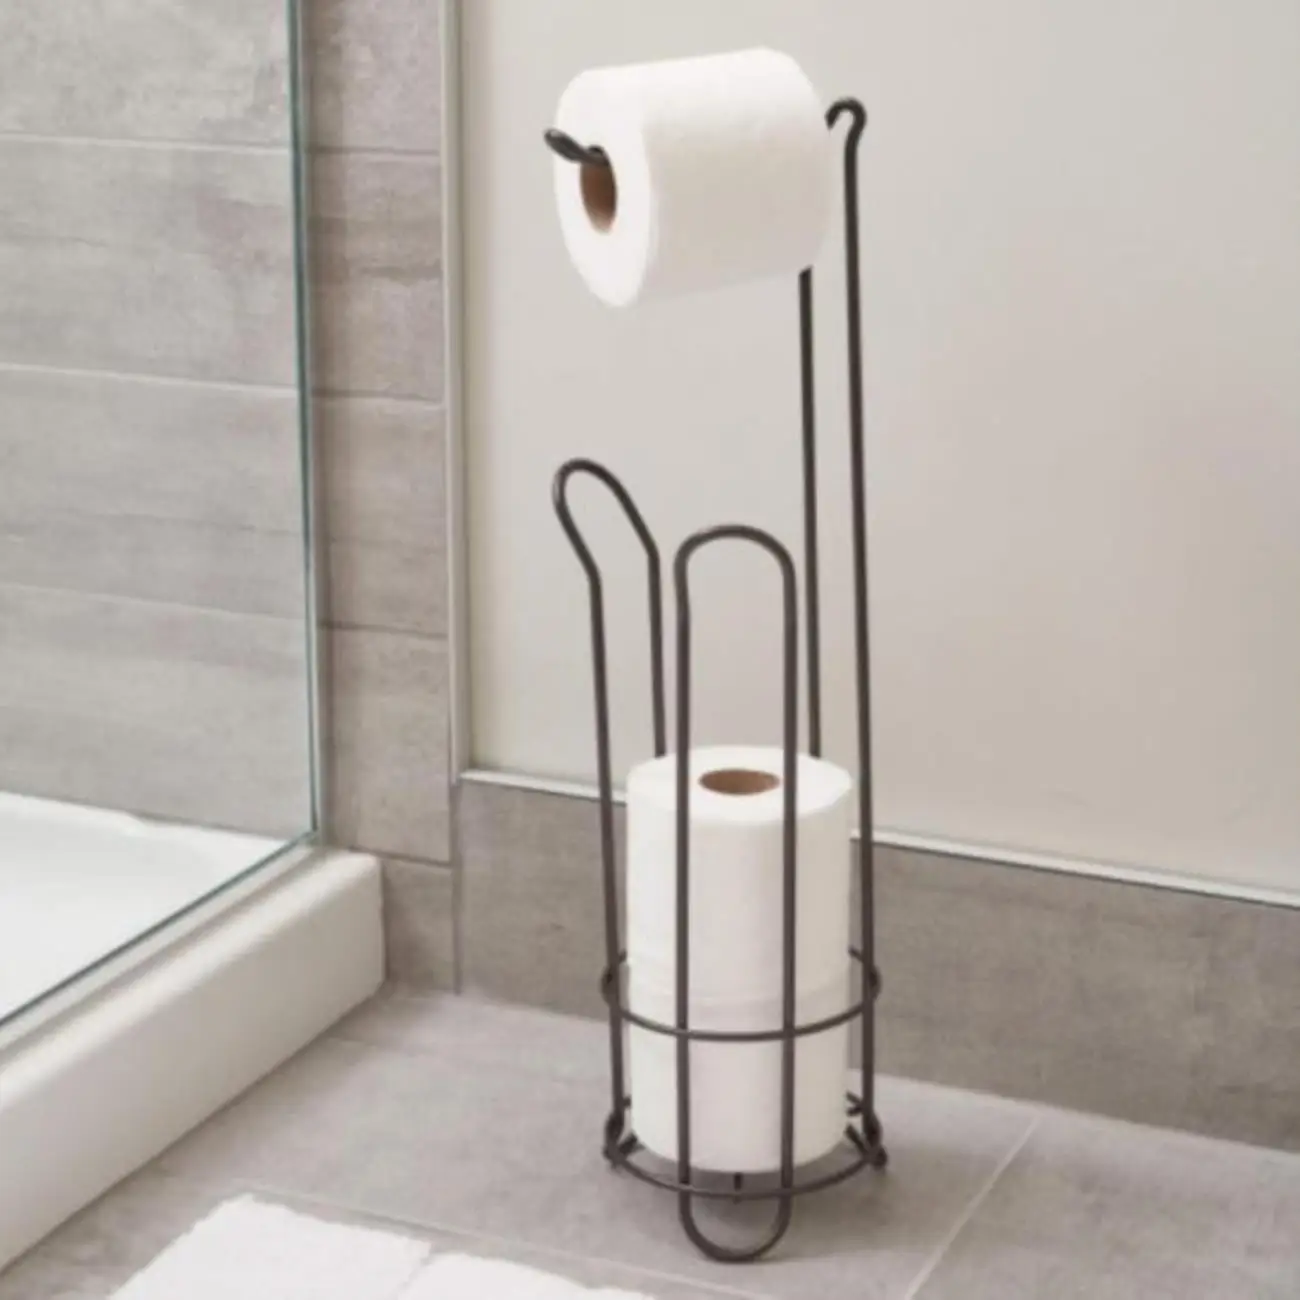 Stainless Steel Floor Standing Paper Roll Towel Holder Stand Organizer Toilet Paper Rack Bathroom Hardware Vertical Storage Bask